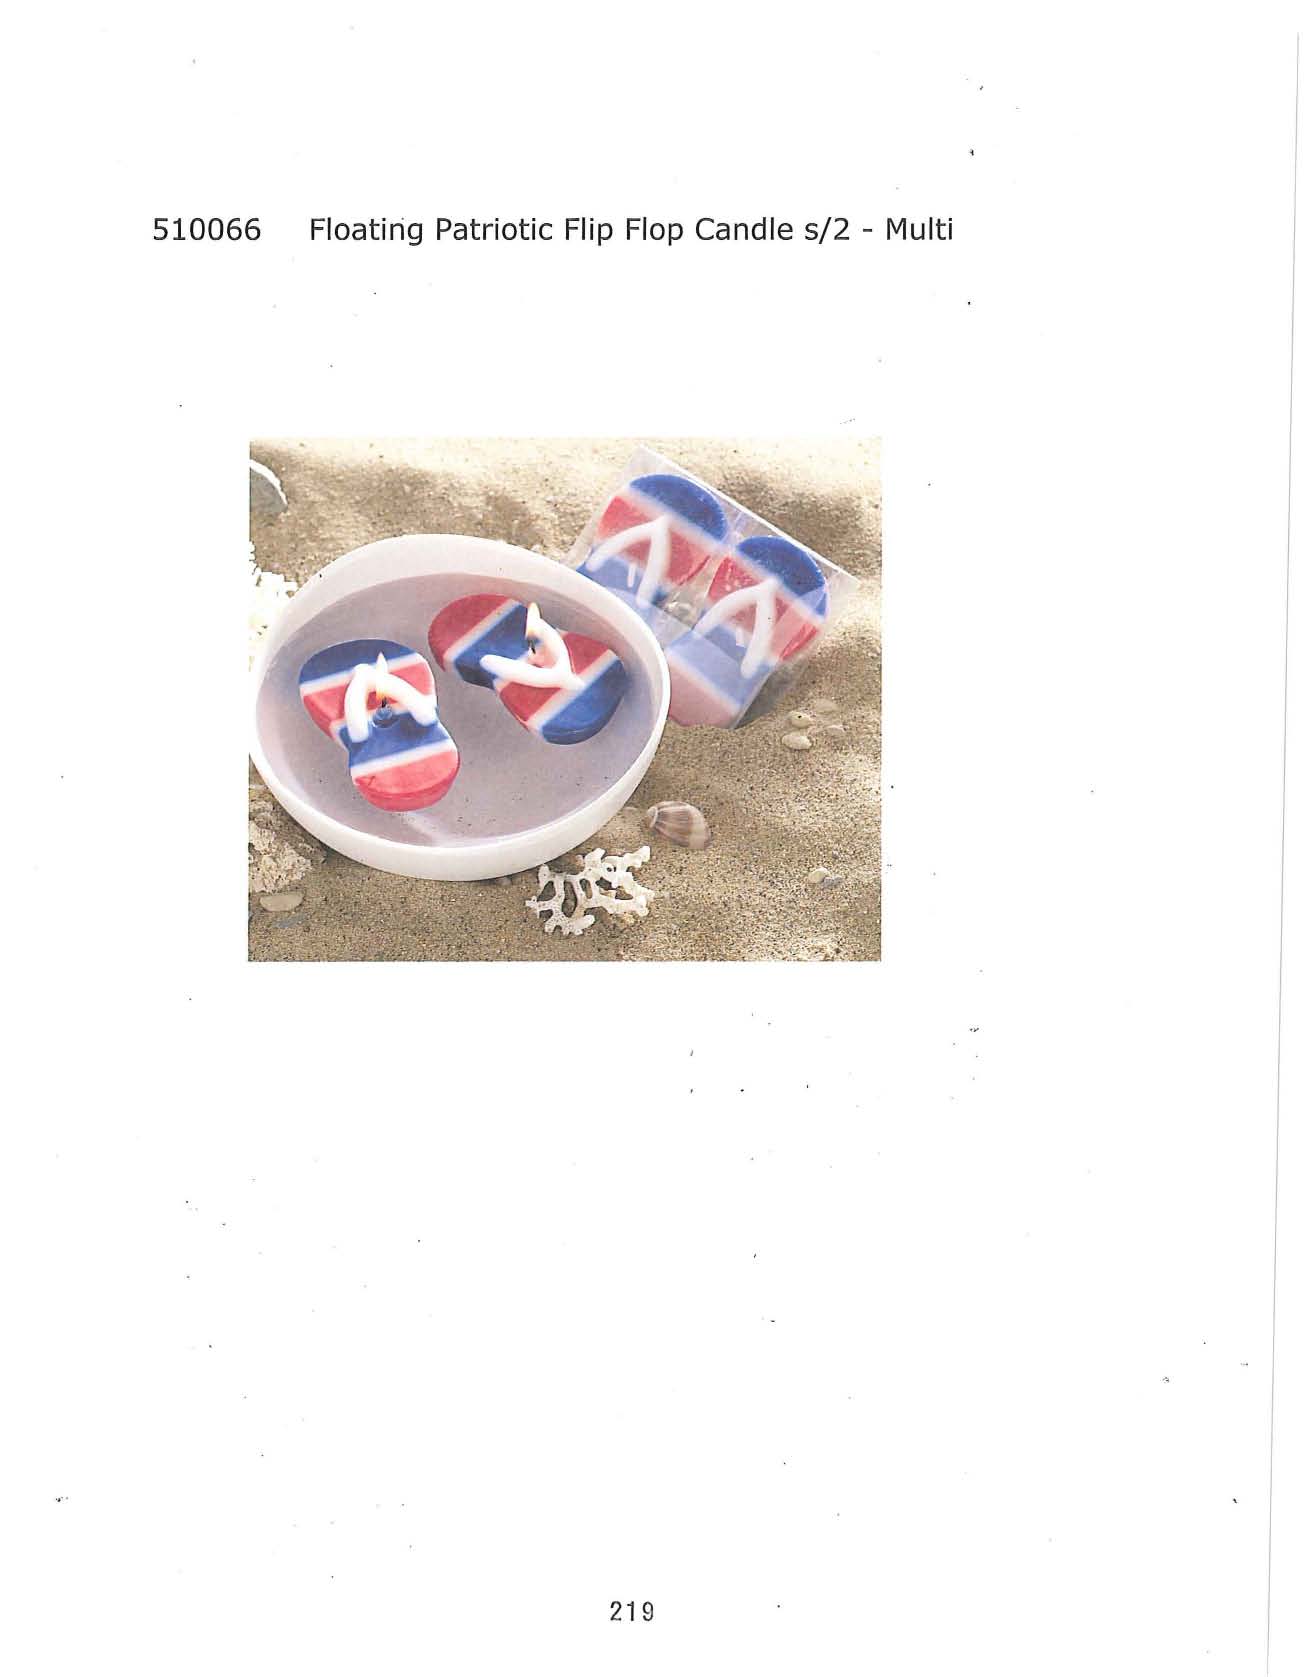 Floating Patriotic Flip Flop Candle s/2 - Multi